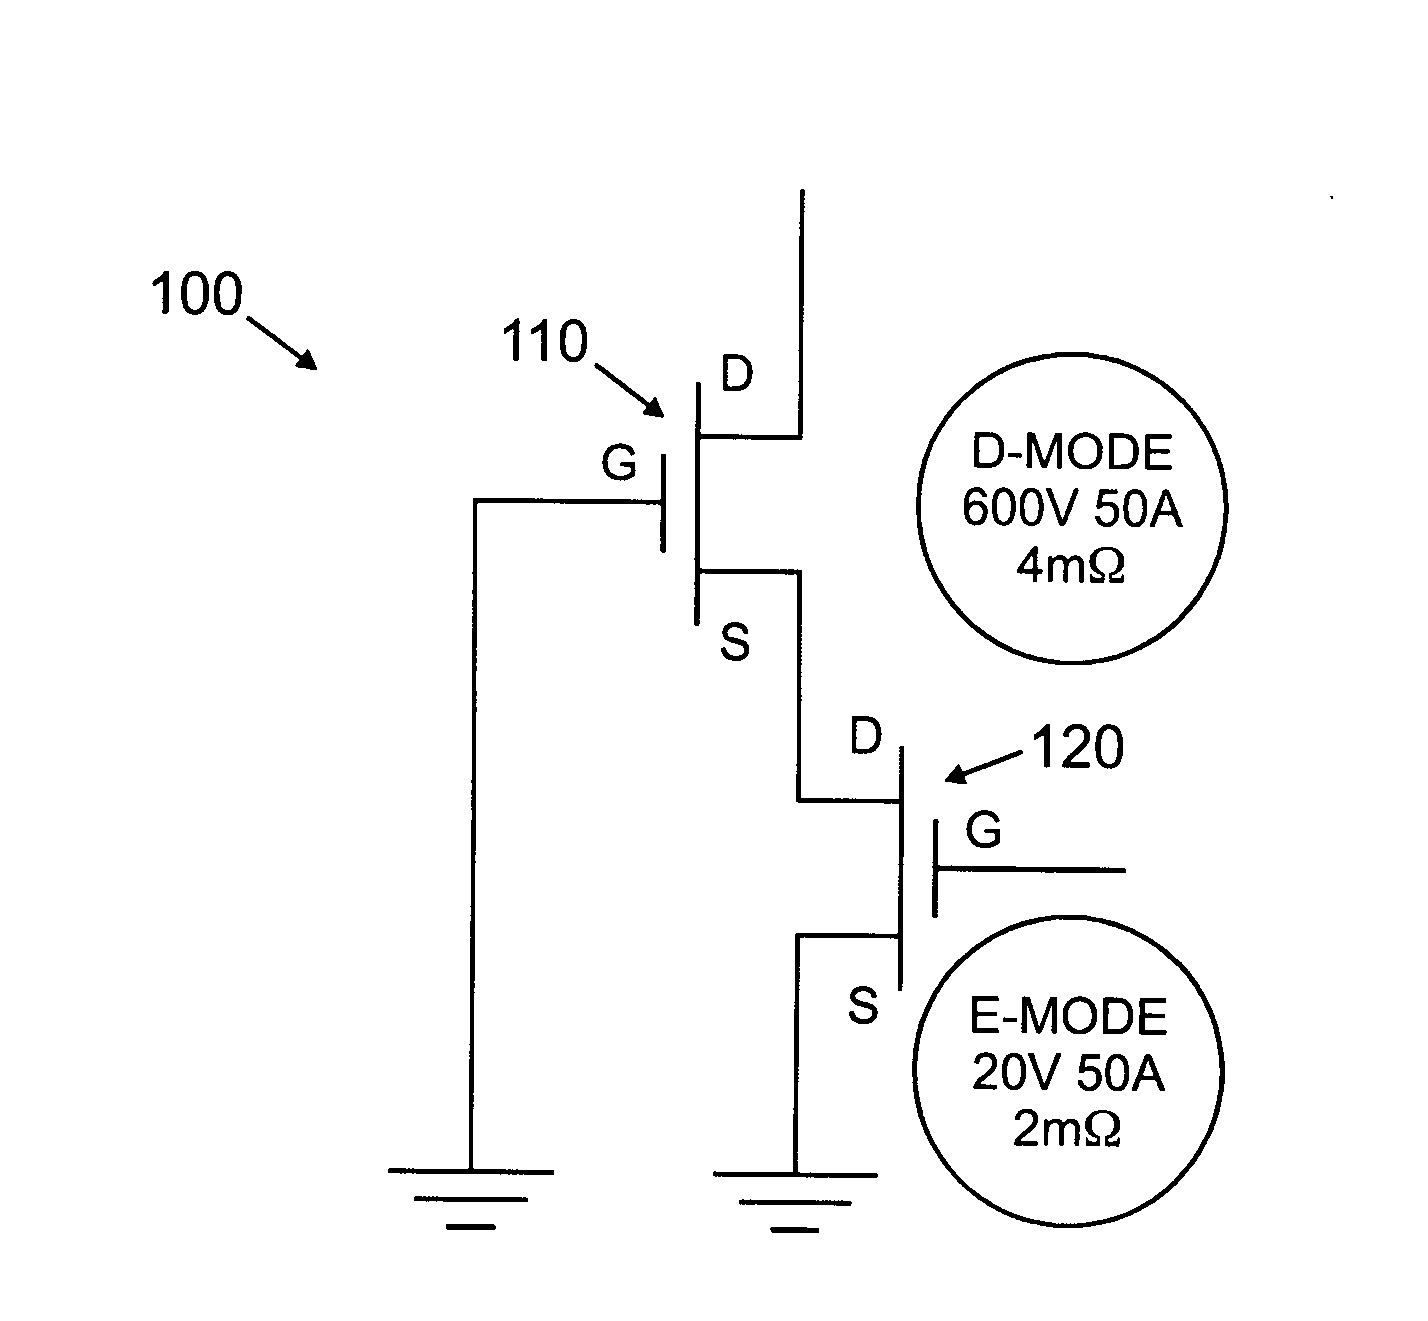 Cascode circuit employing a depletion-mode, GaN-based fet